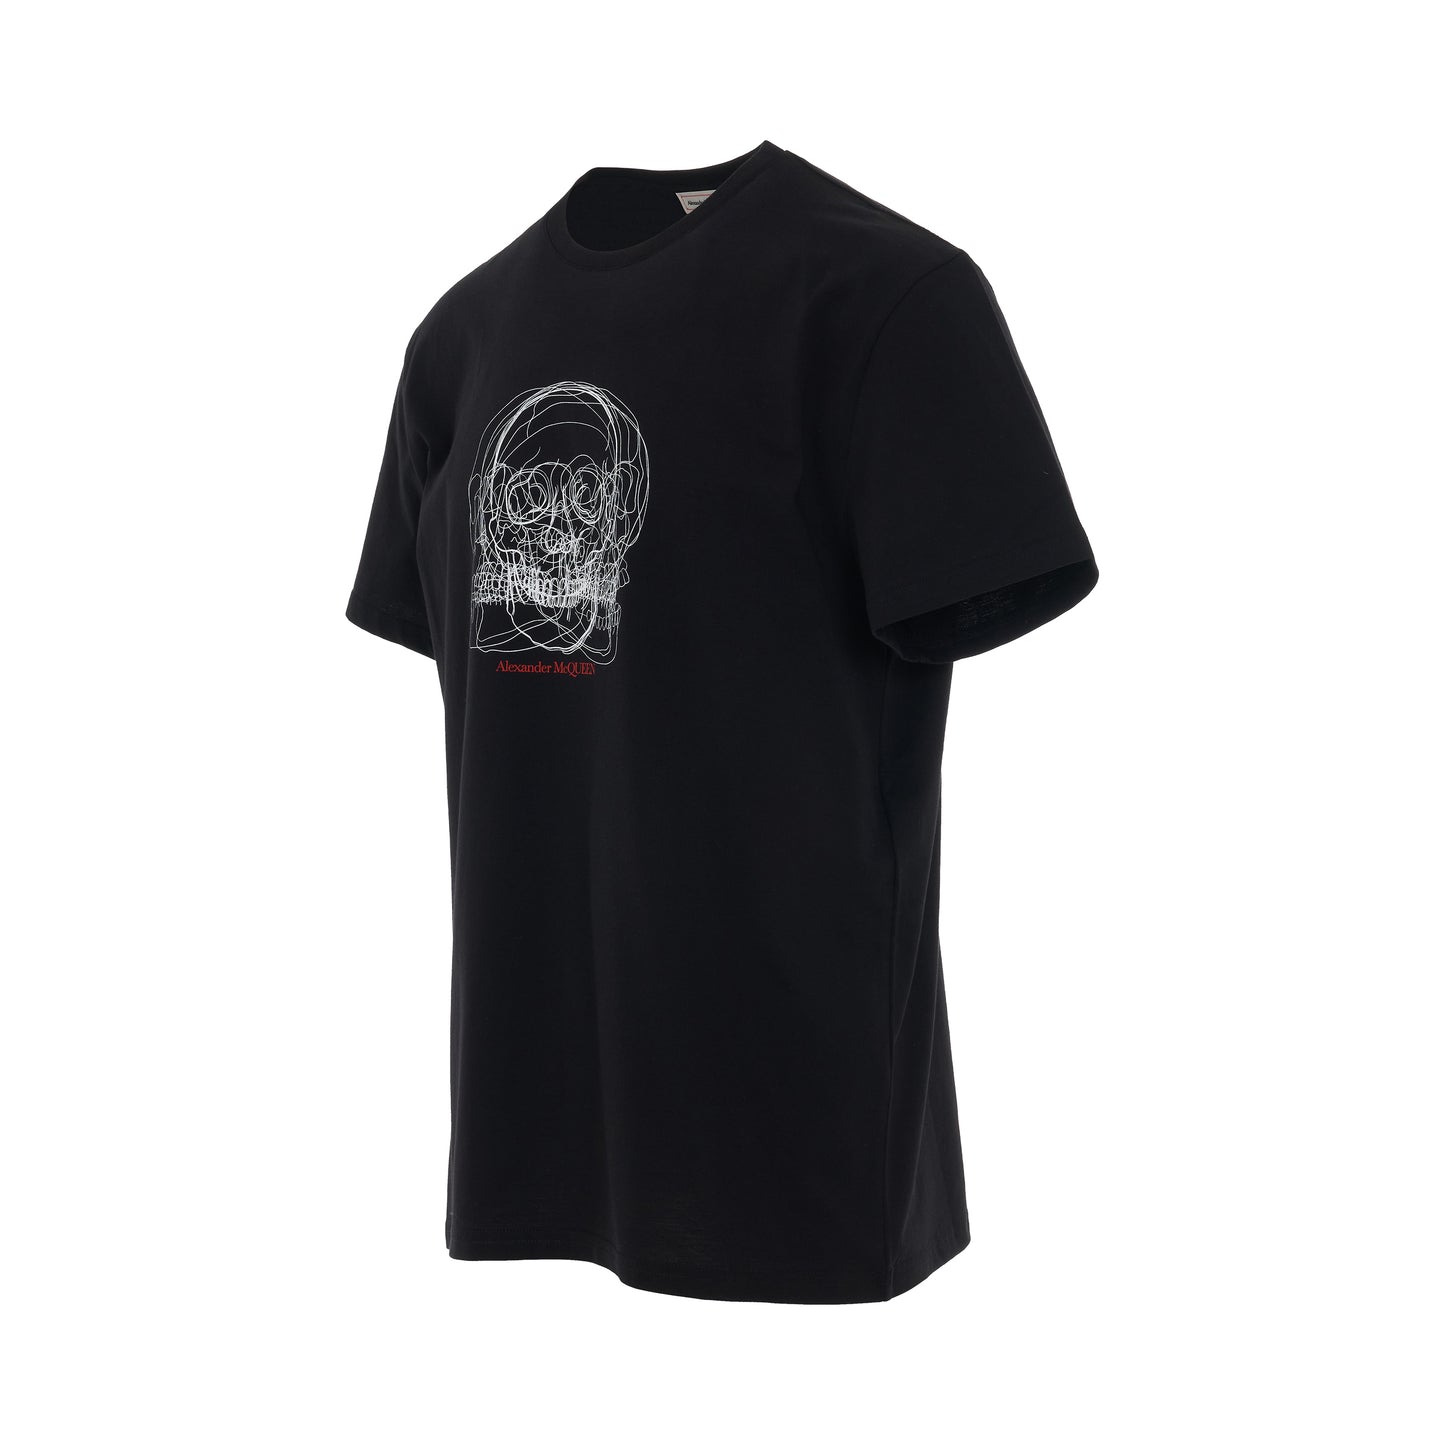 Sketch Skull Print Logo T-Shirt in Black